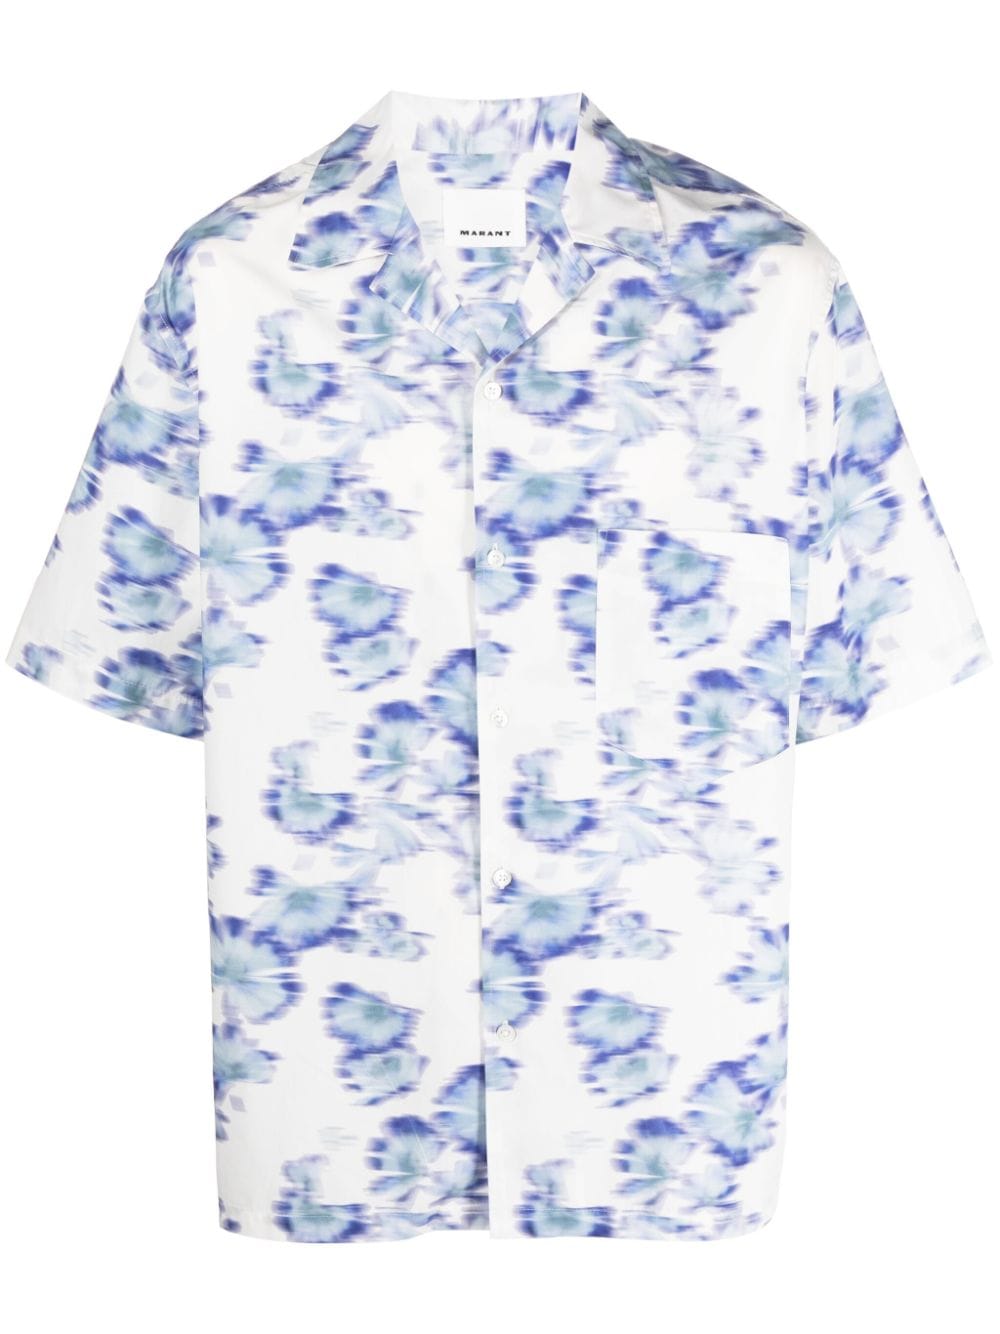 Lazlo floral-print shirt